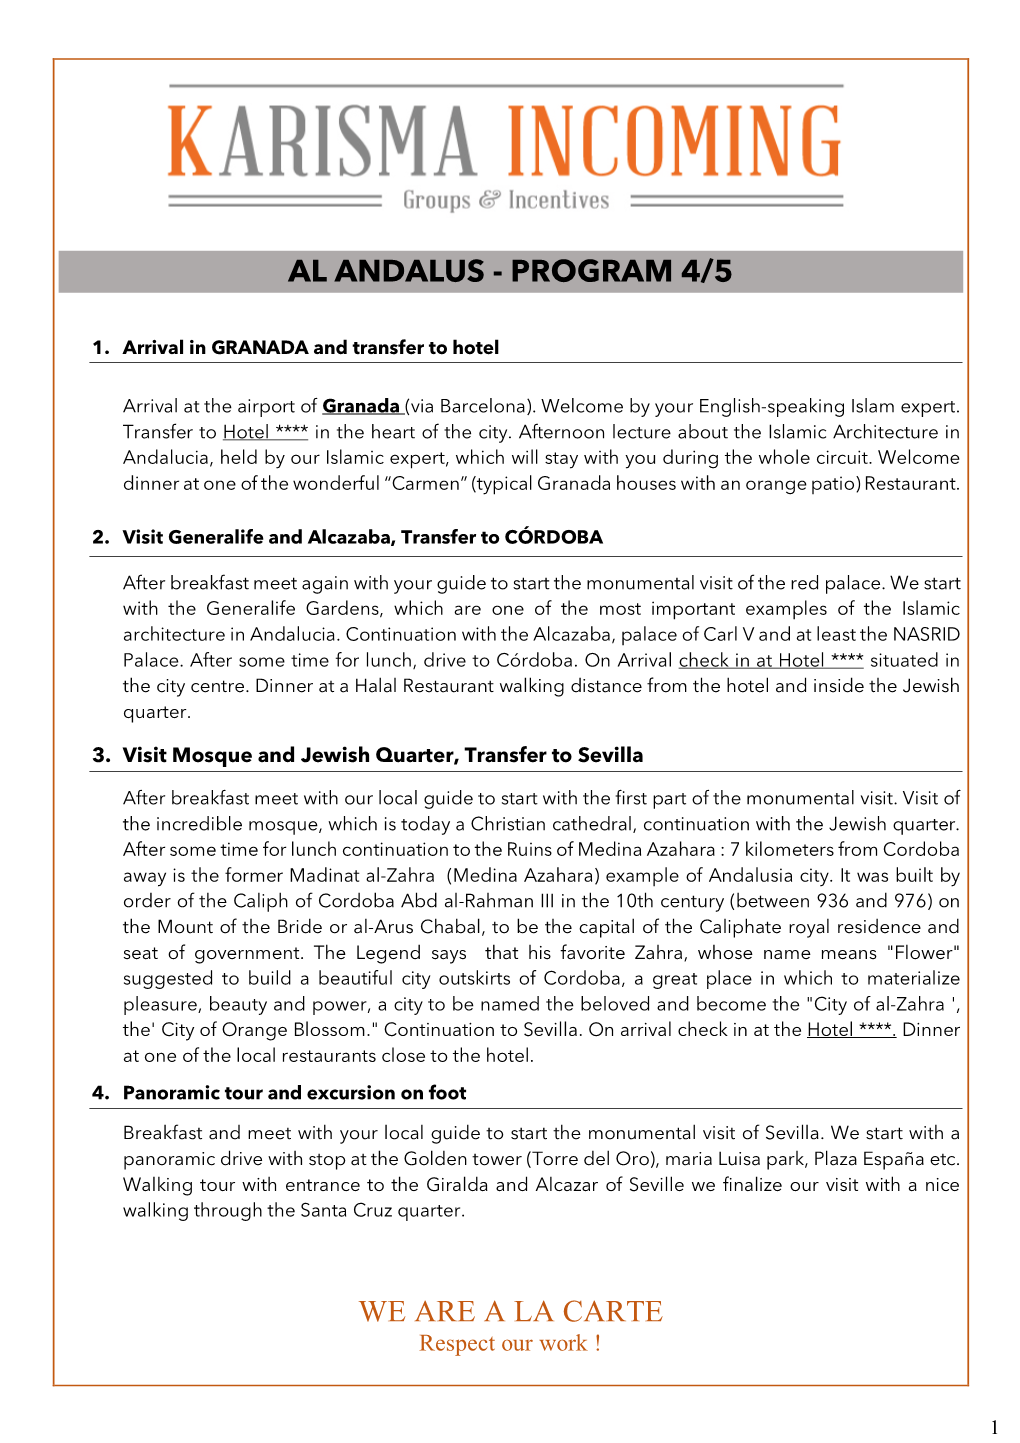 Al Andalus - Program 4/5